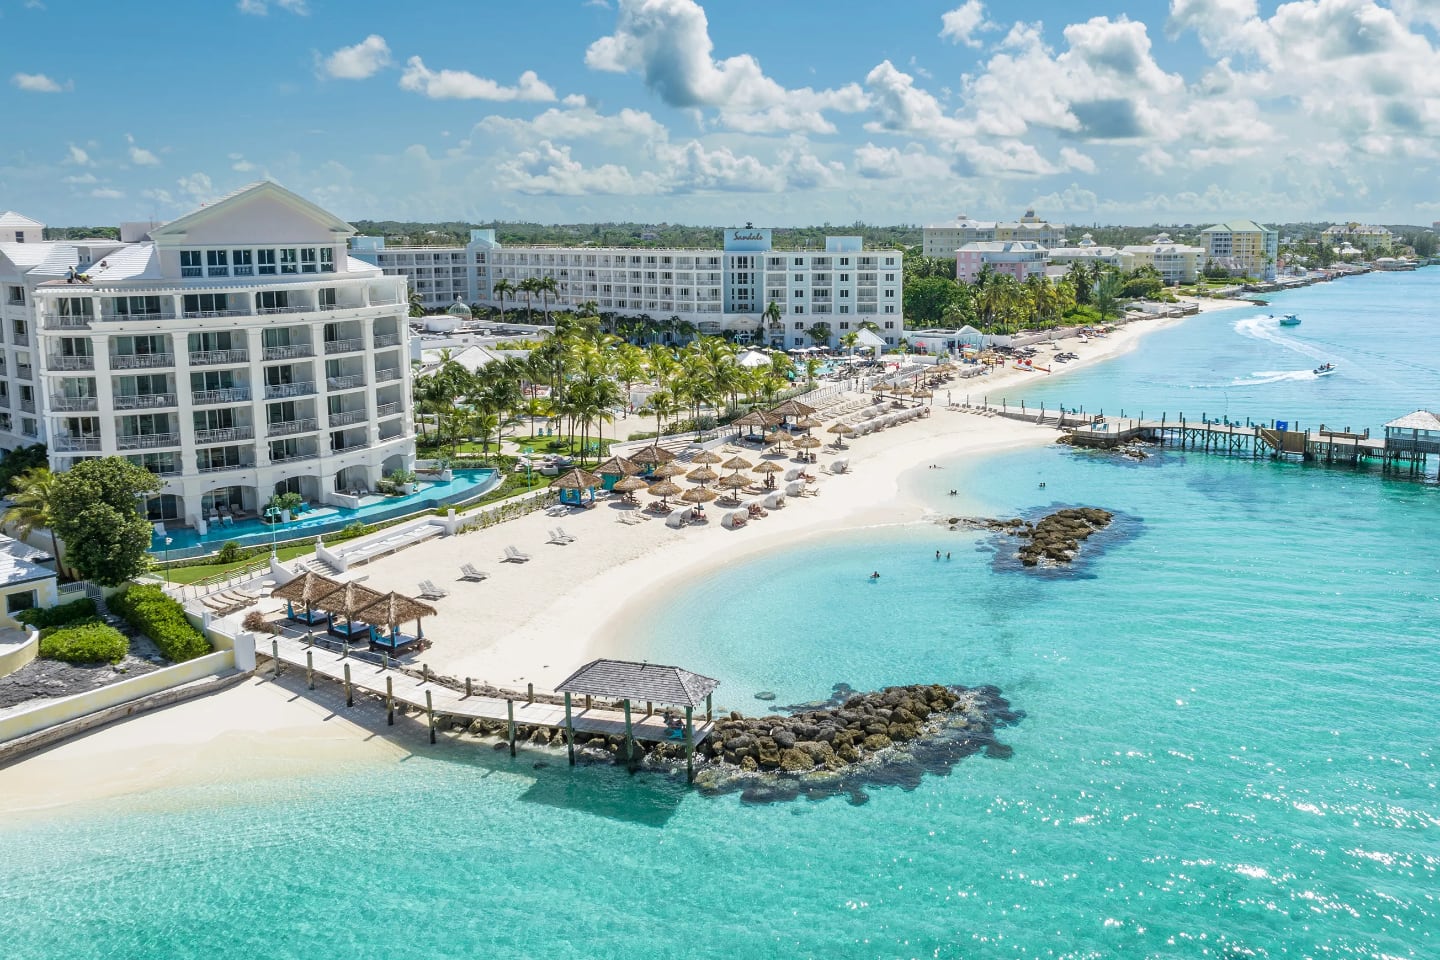 luxury resort in the Bahamas